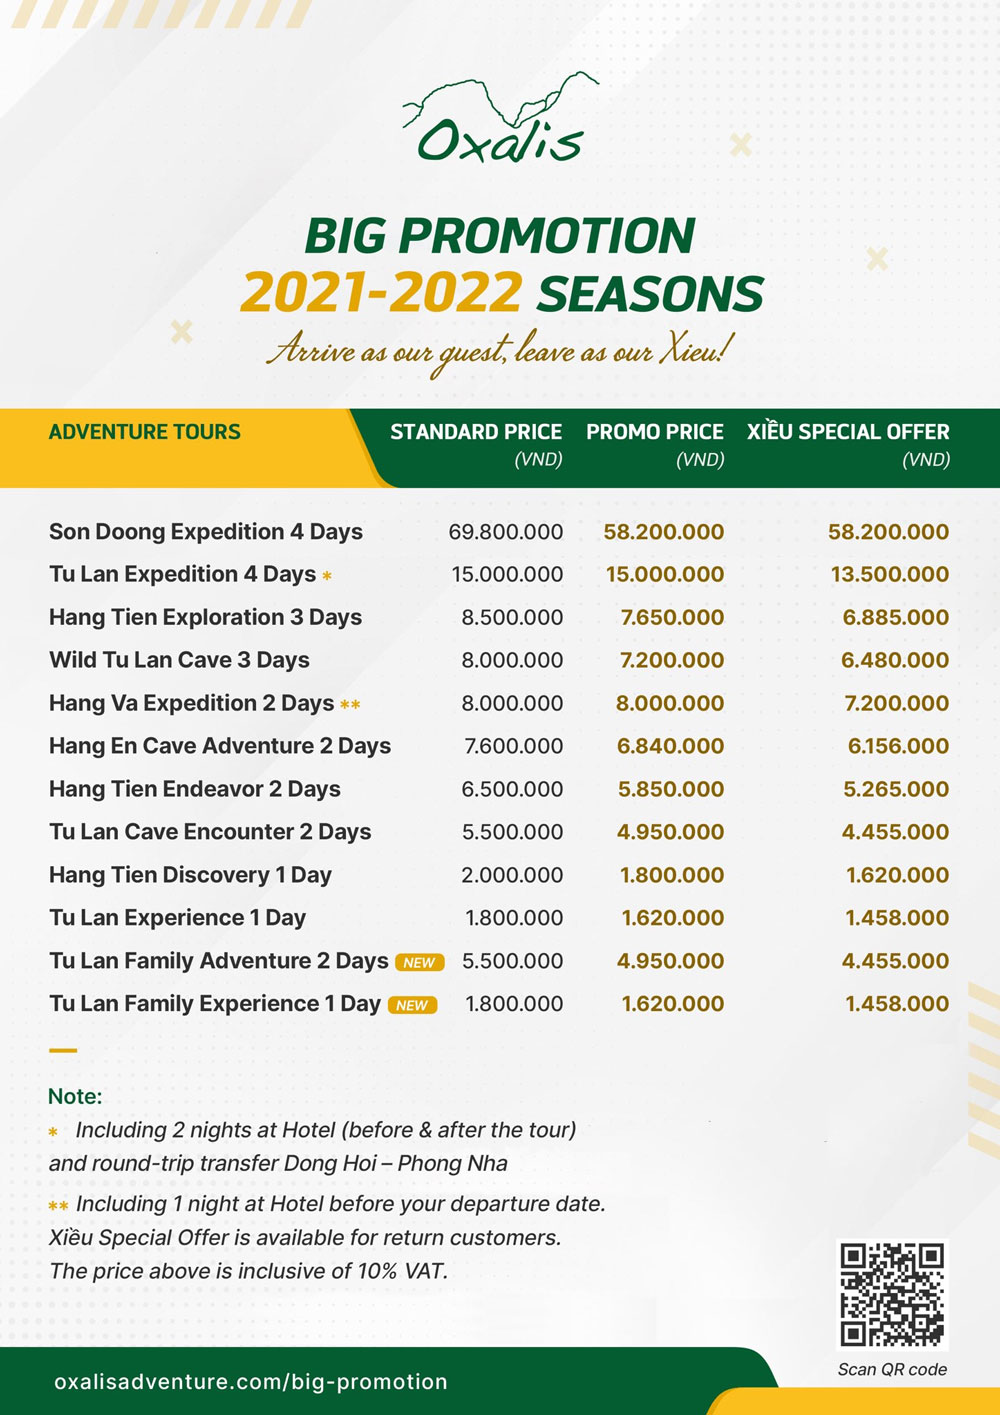 Oxalis Big Promotion For The 2021 - 2022 Season